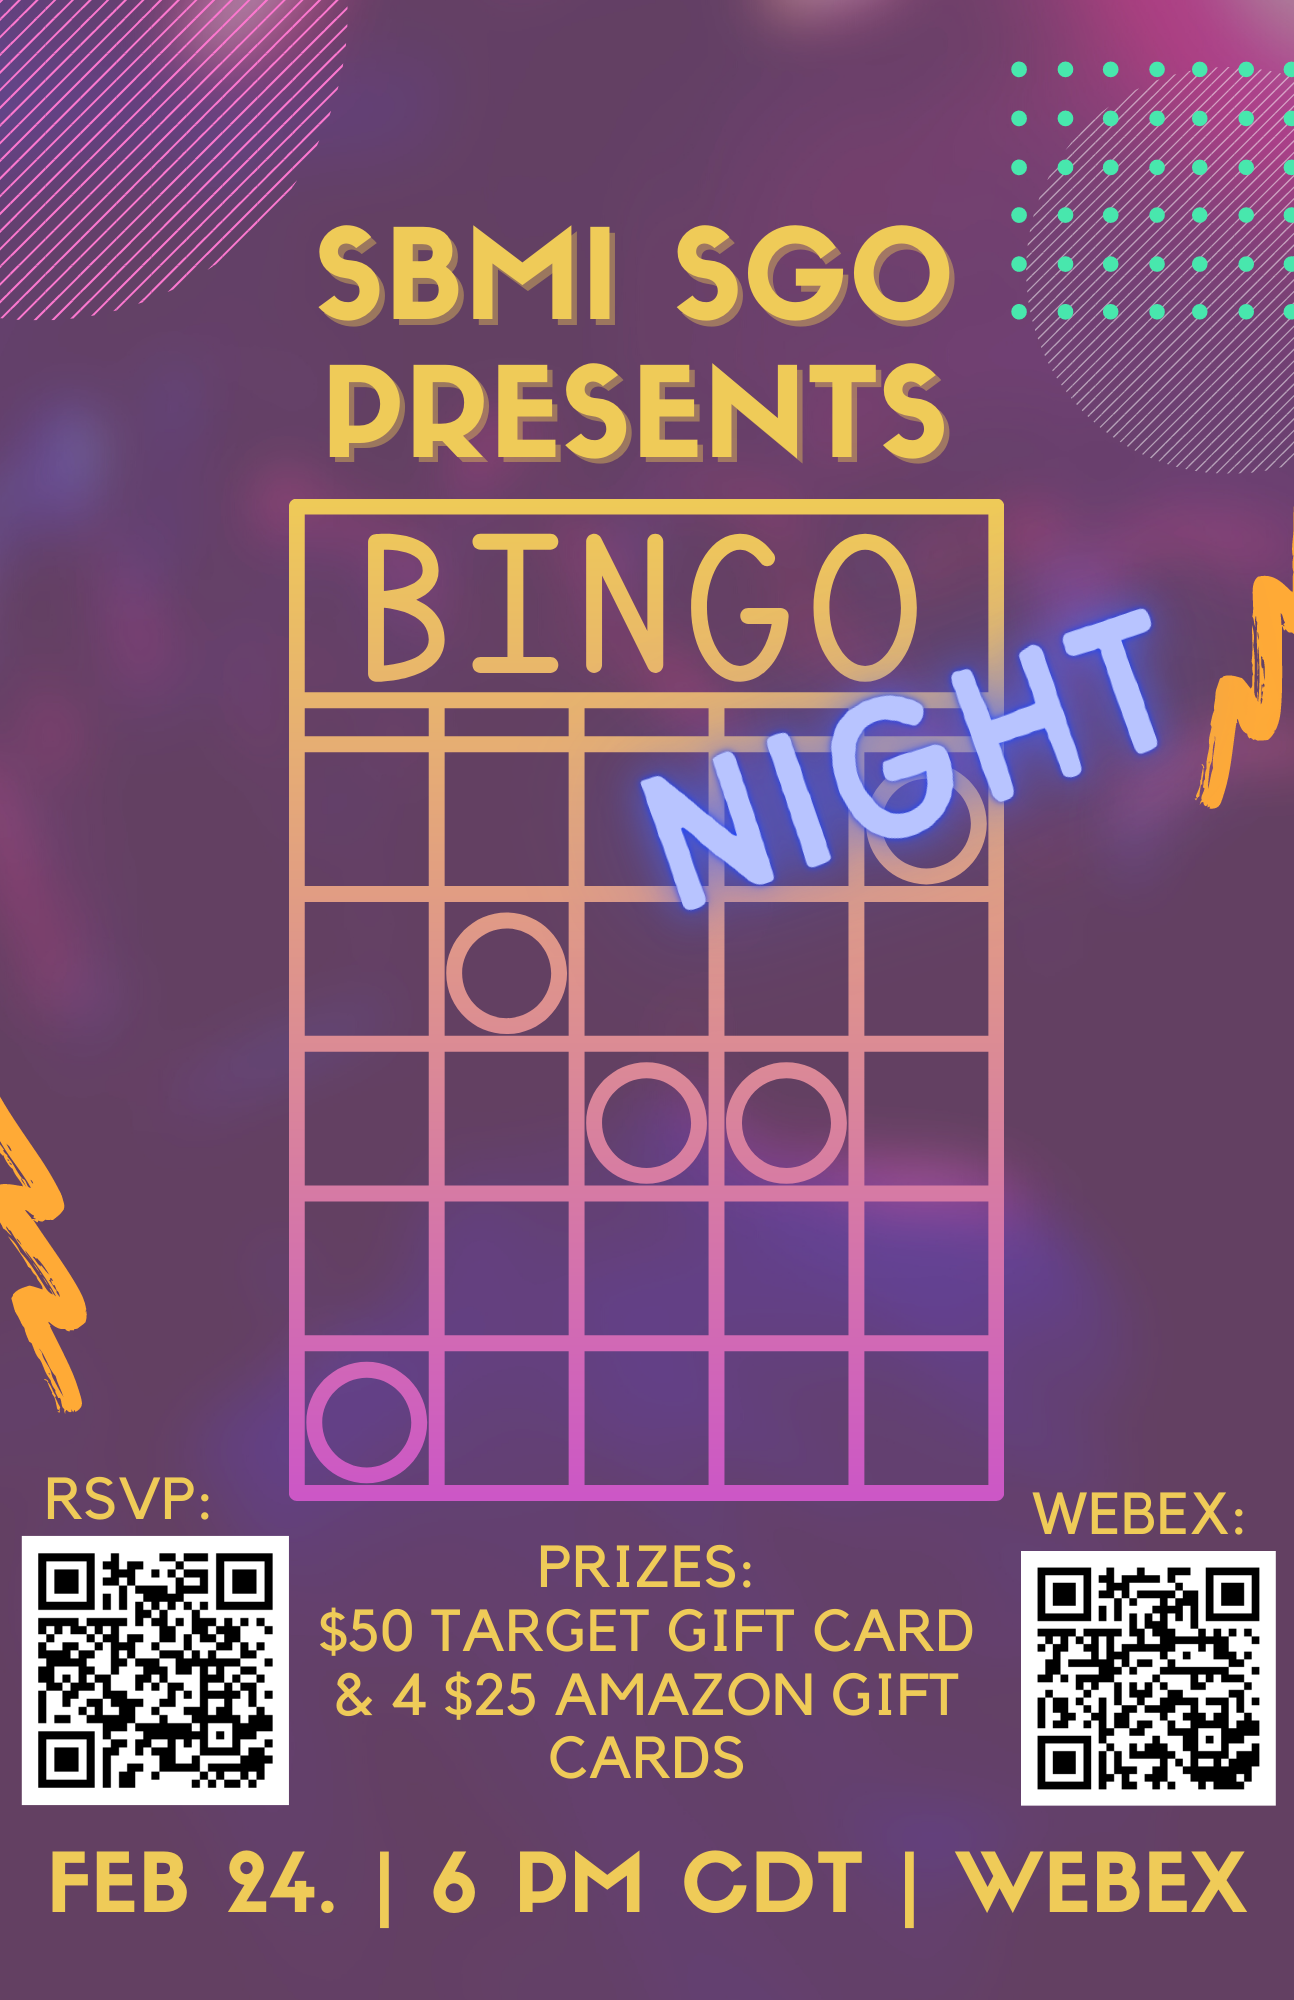 SBMI SGO Presents Bingo Night